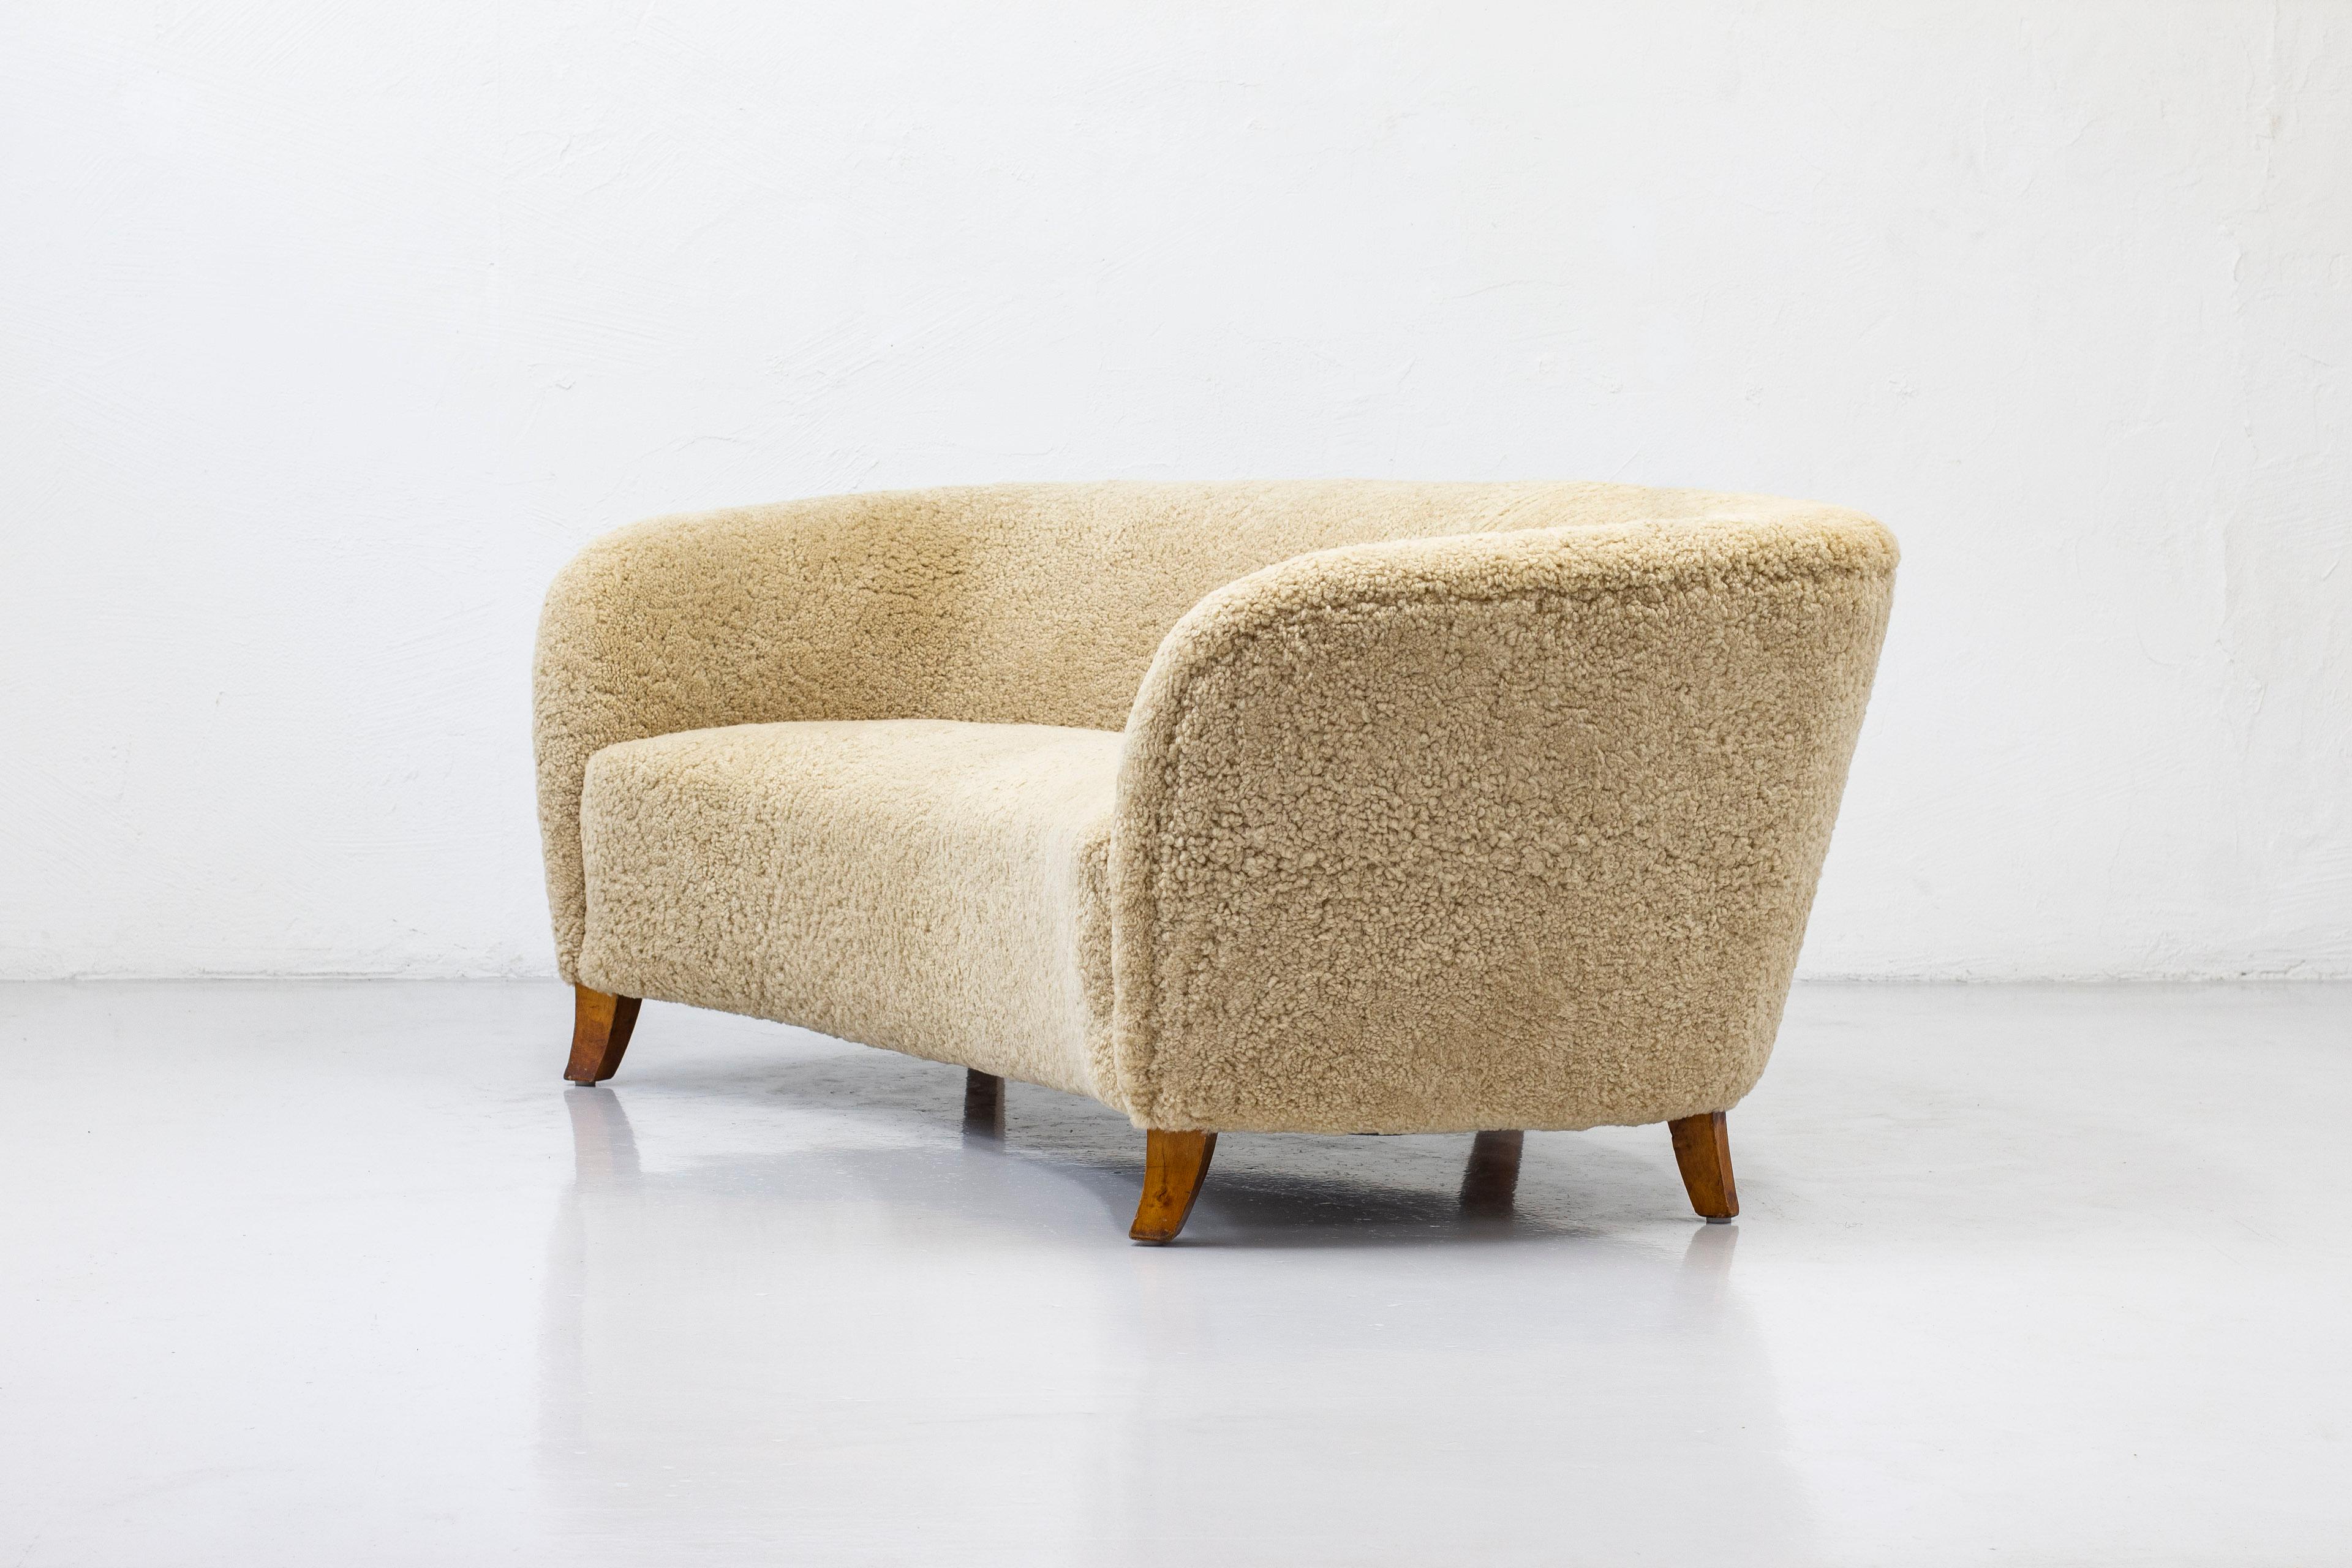 Mid-20th Century Curved Swedish Modern Sofa with Sheepskin, Sweden, 1930-40s